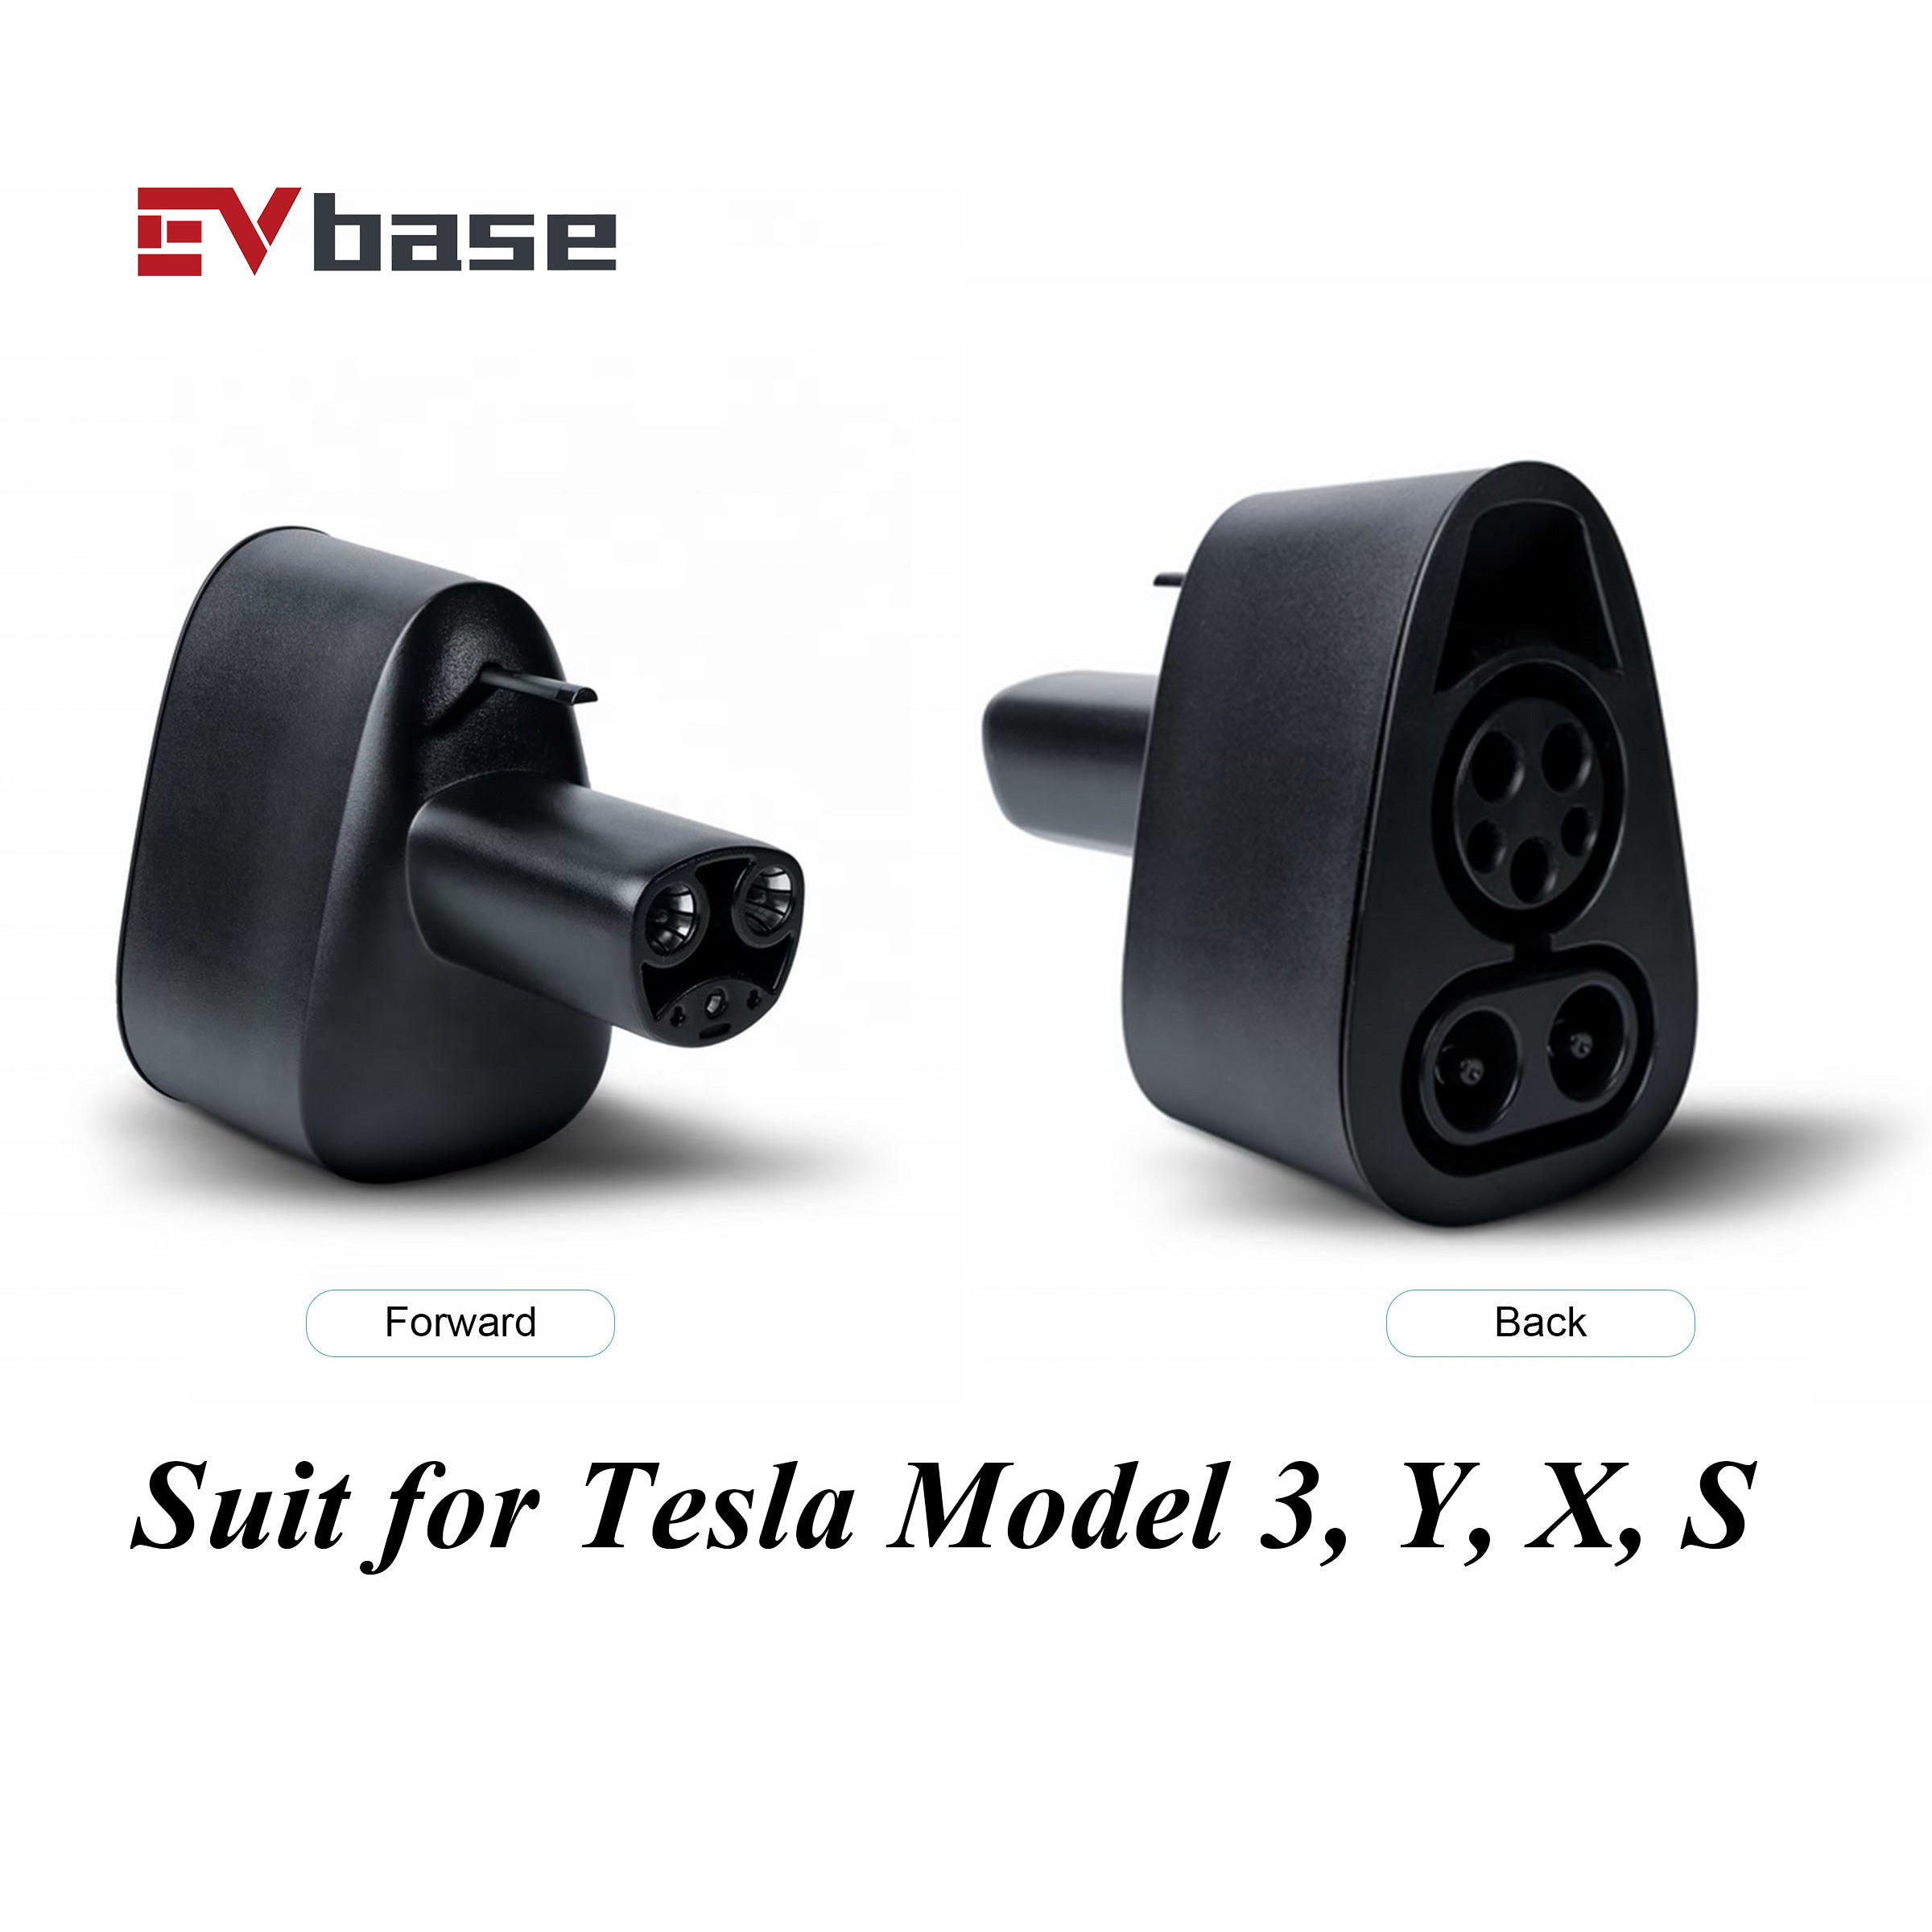  BetyBedy CCS Adapter for Tesla Model Y/3/X/S, CCS